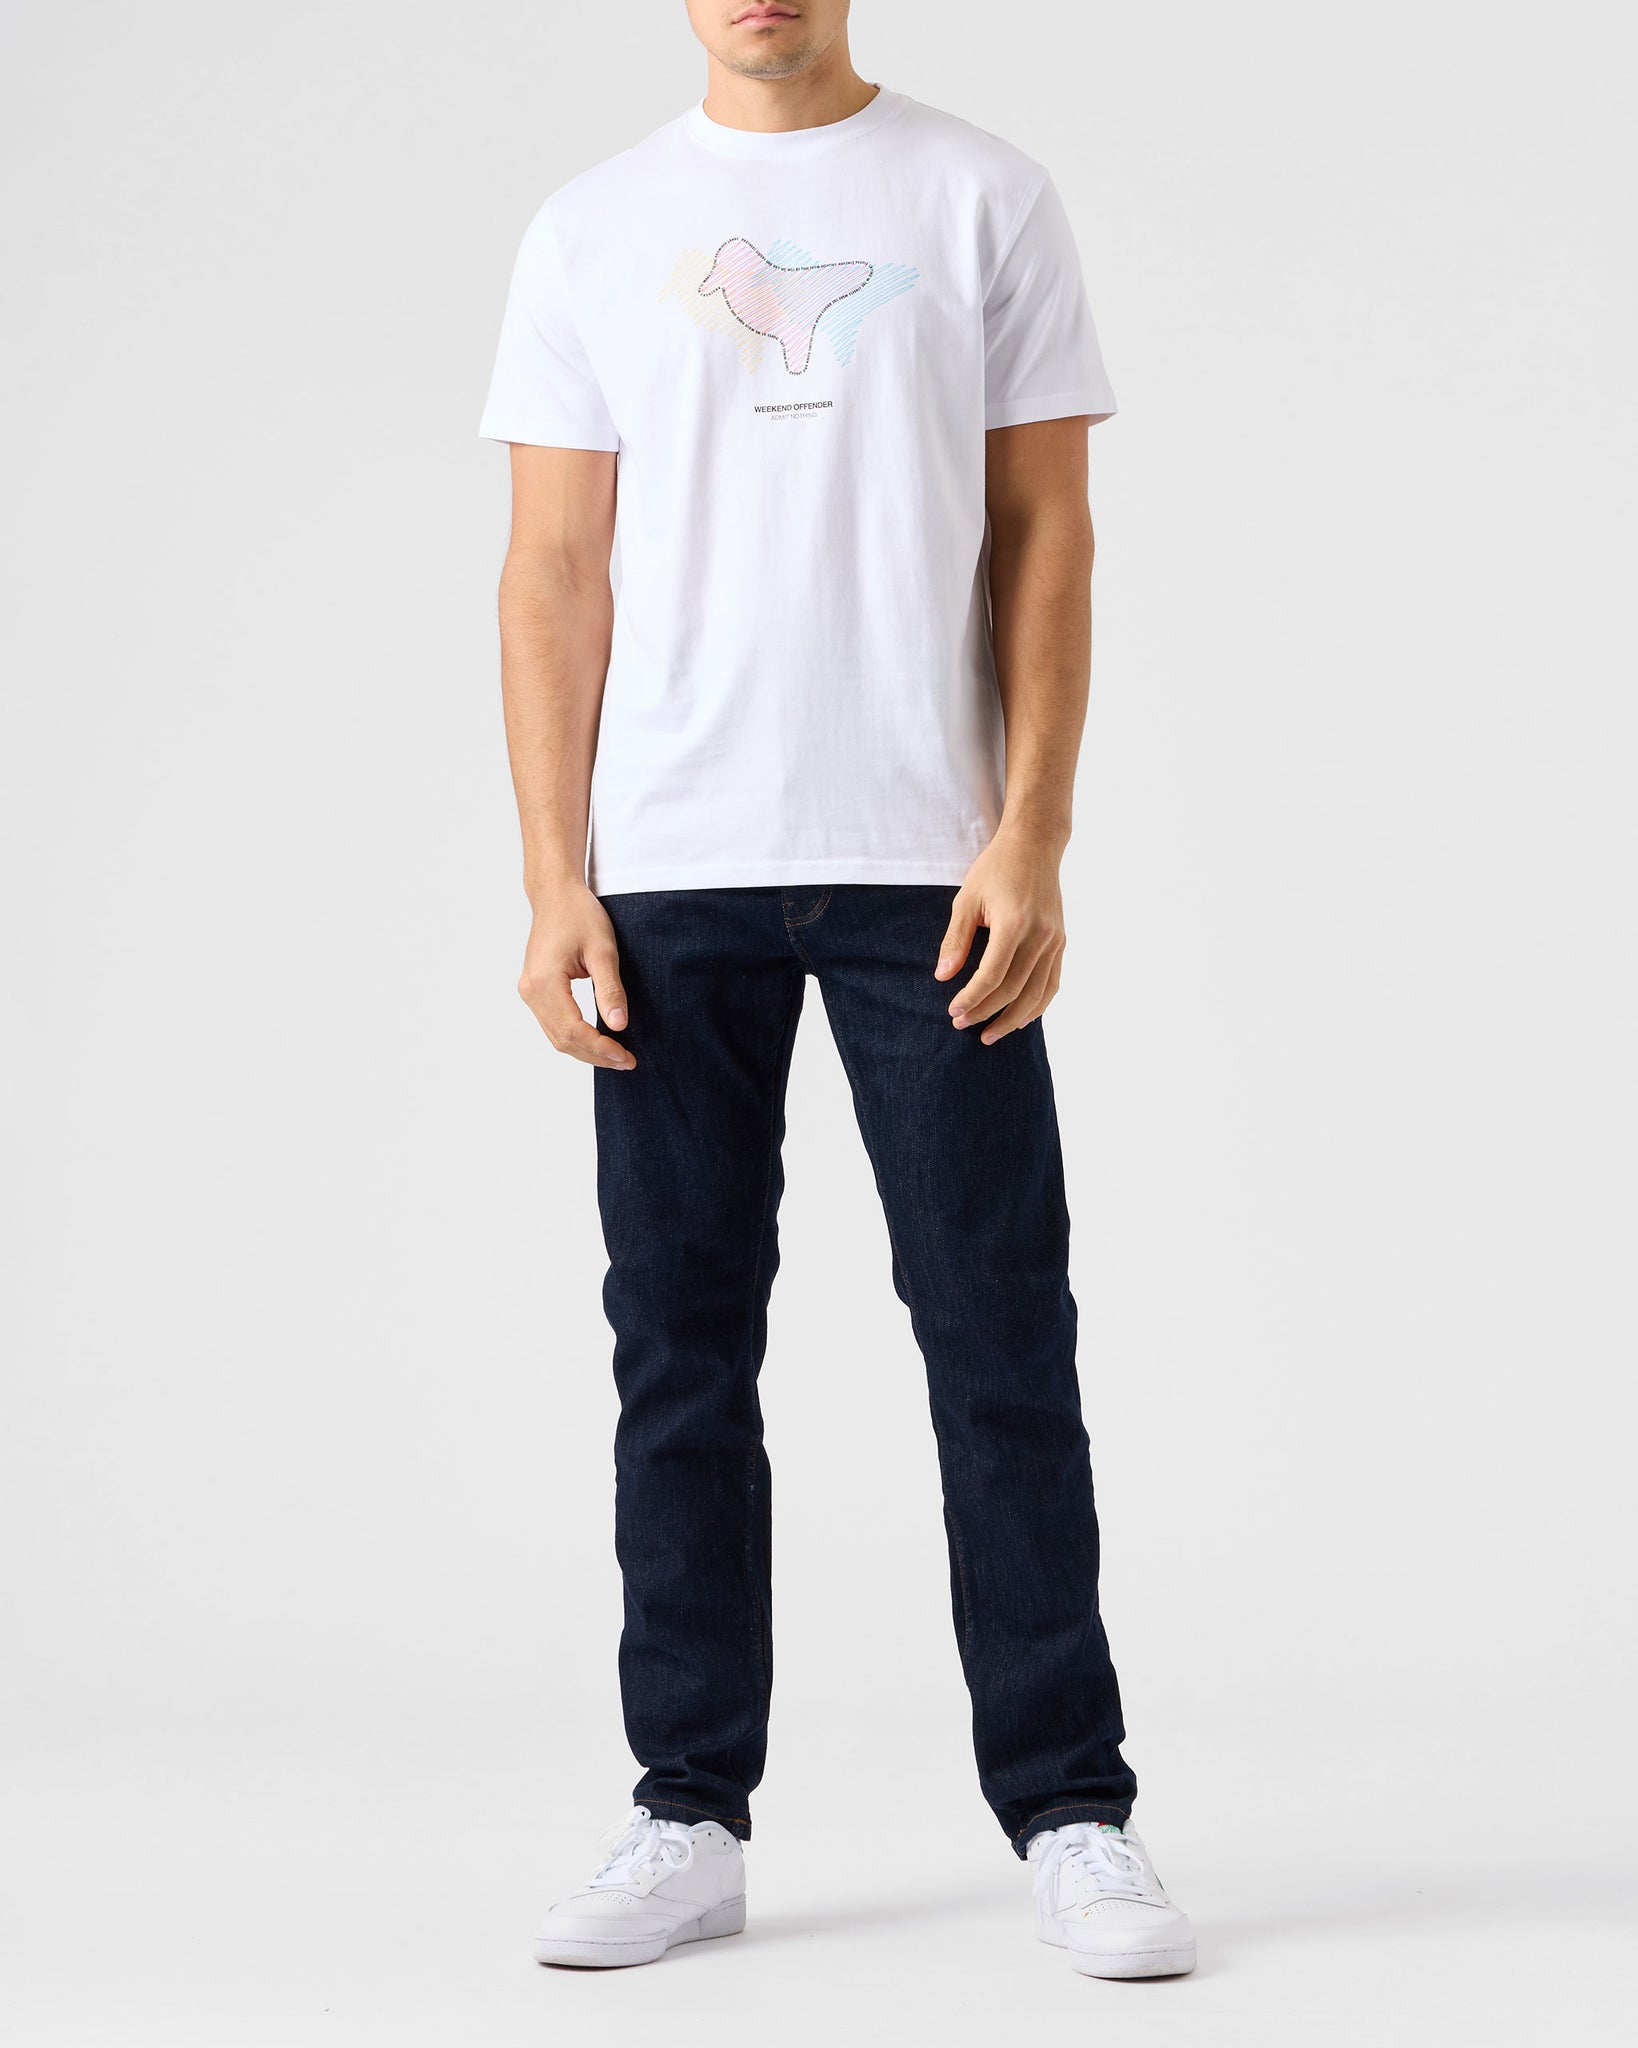 Gabe Graphic T-Shirt White